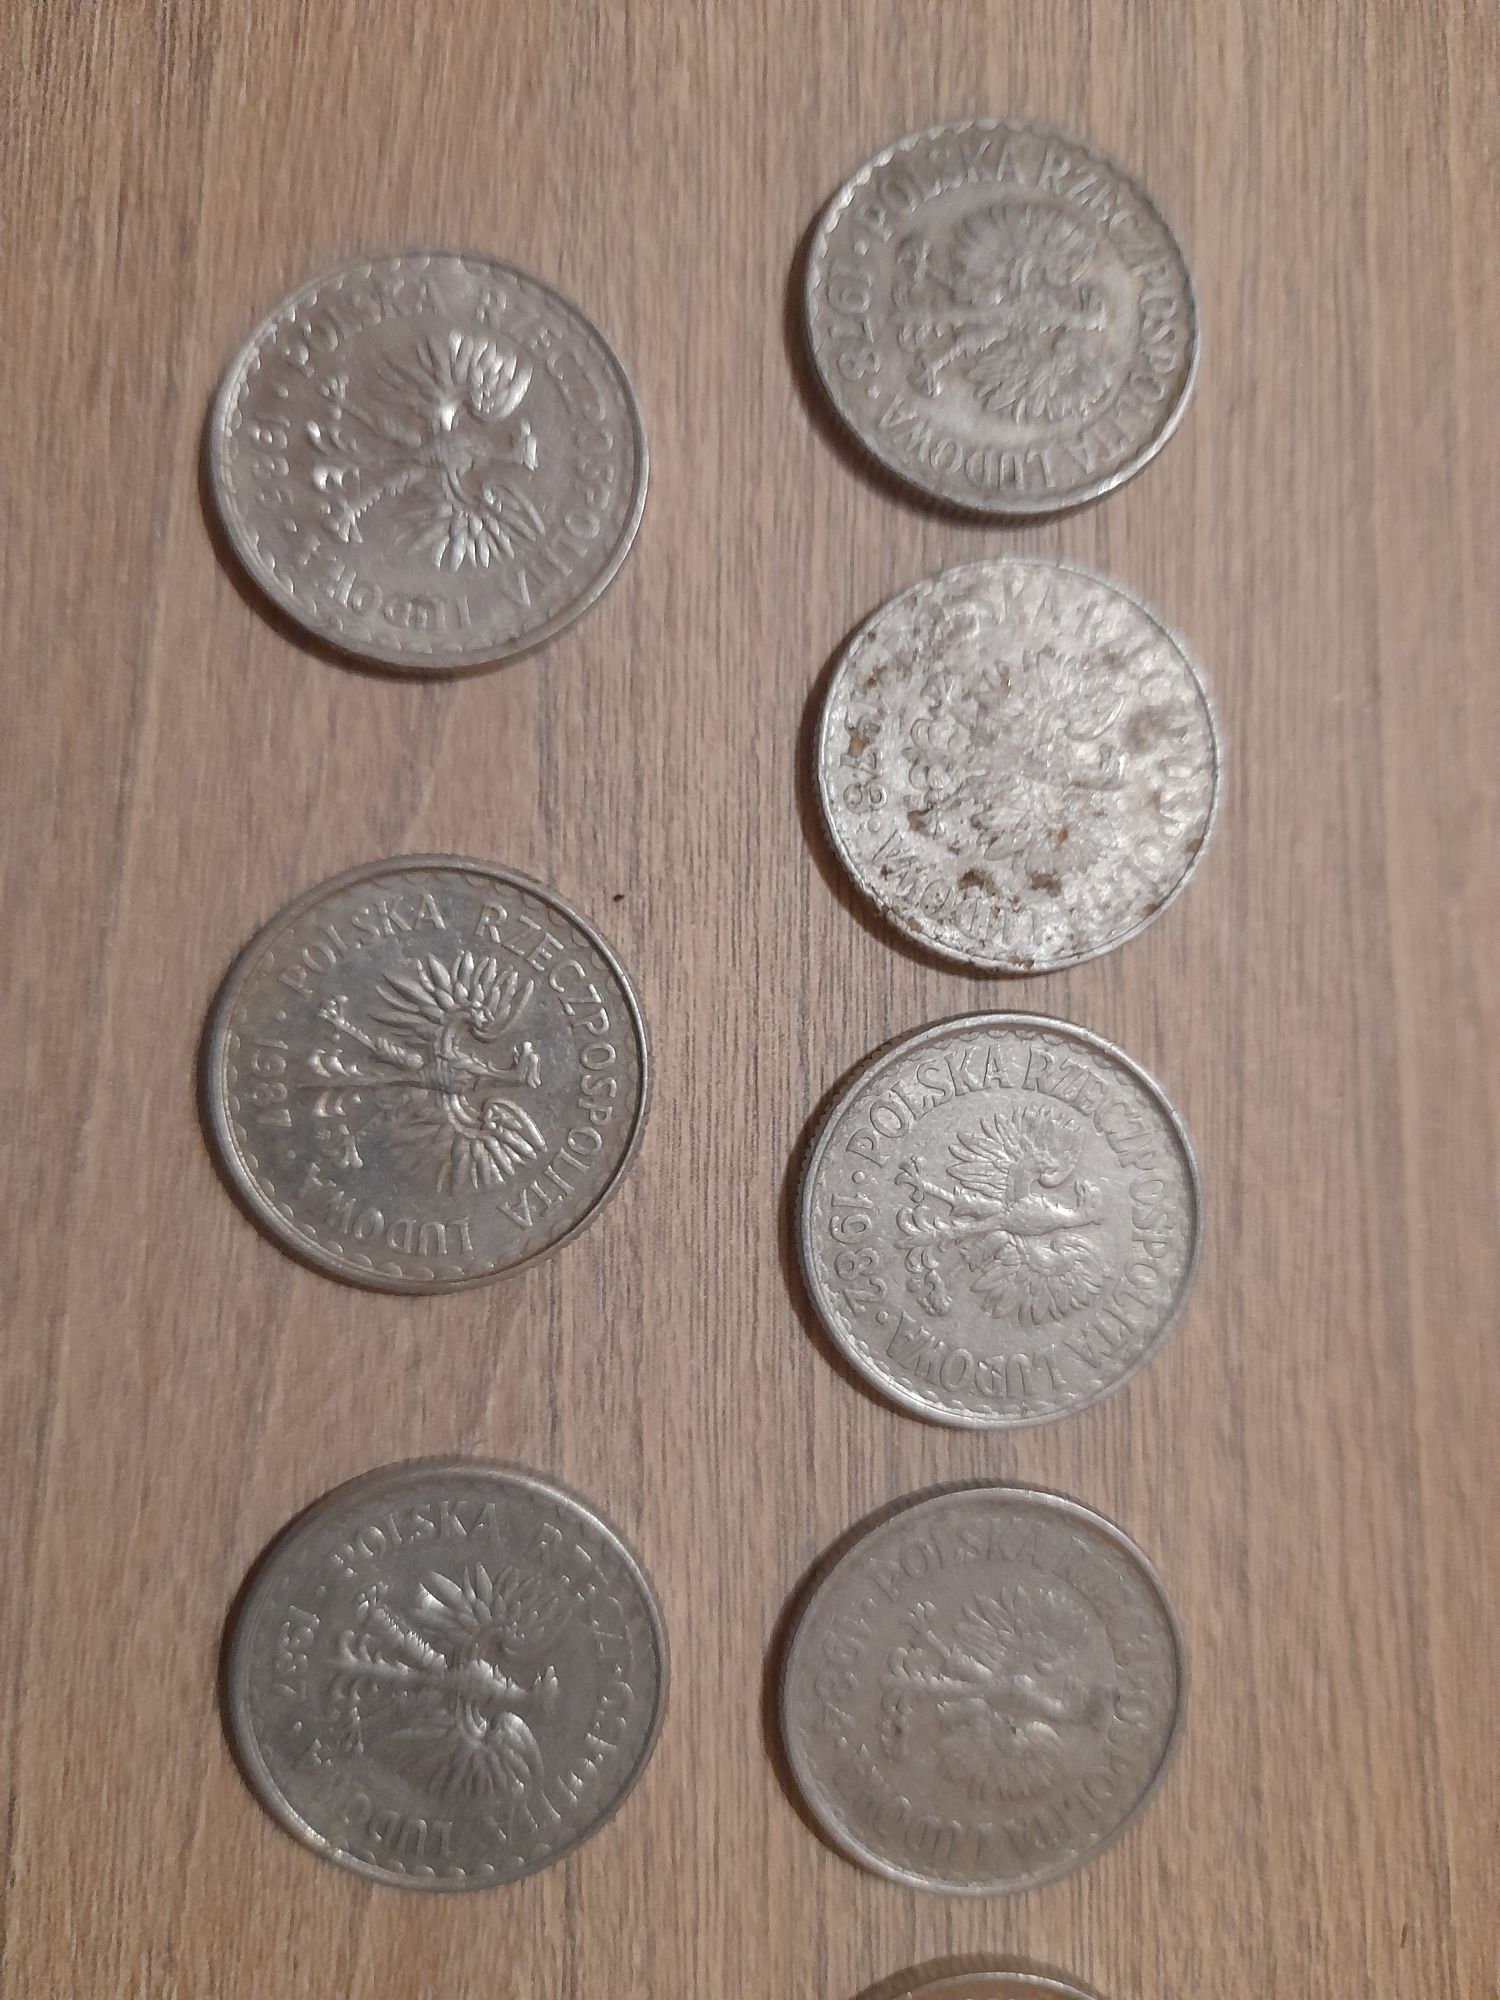 Stare monety 1zl, 2zl z PRL